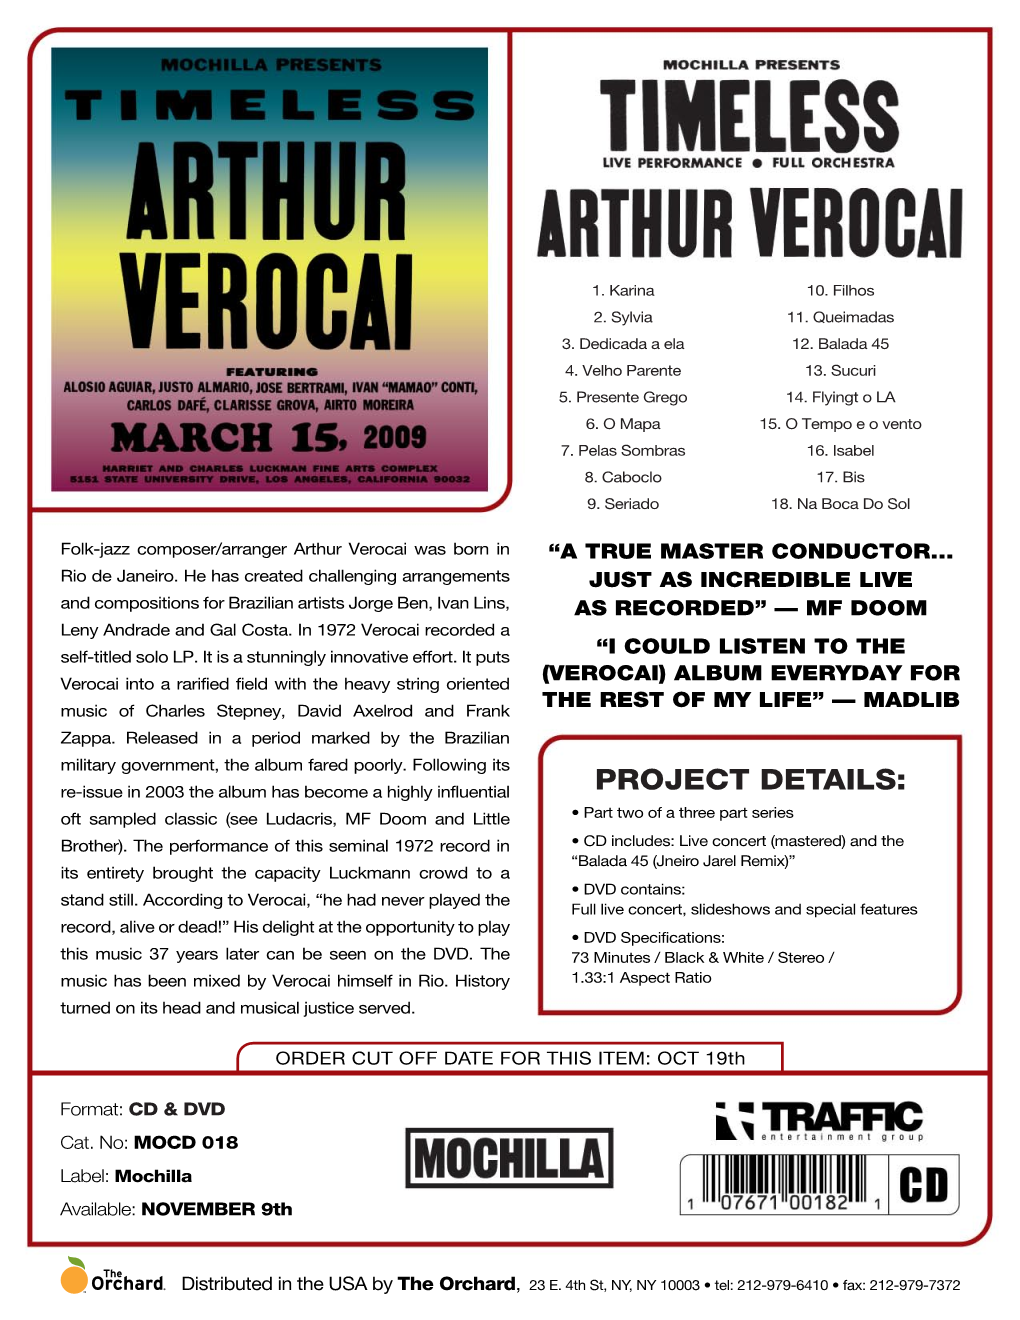 MOCD 018 TIMELESS Presents ARTHUR VEROCAI CD